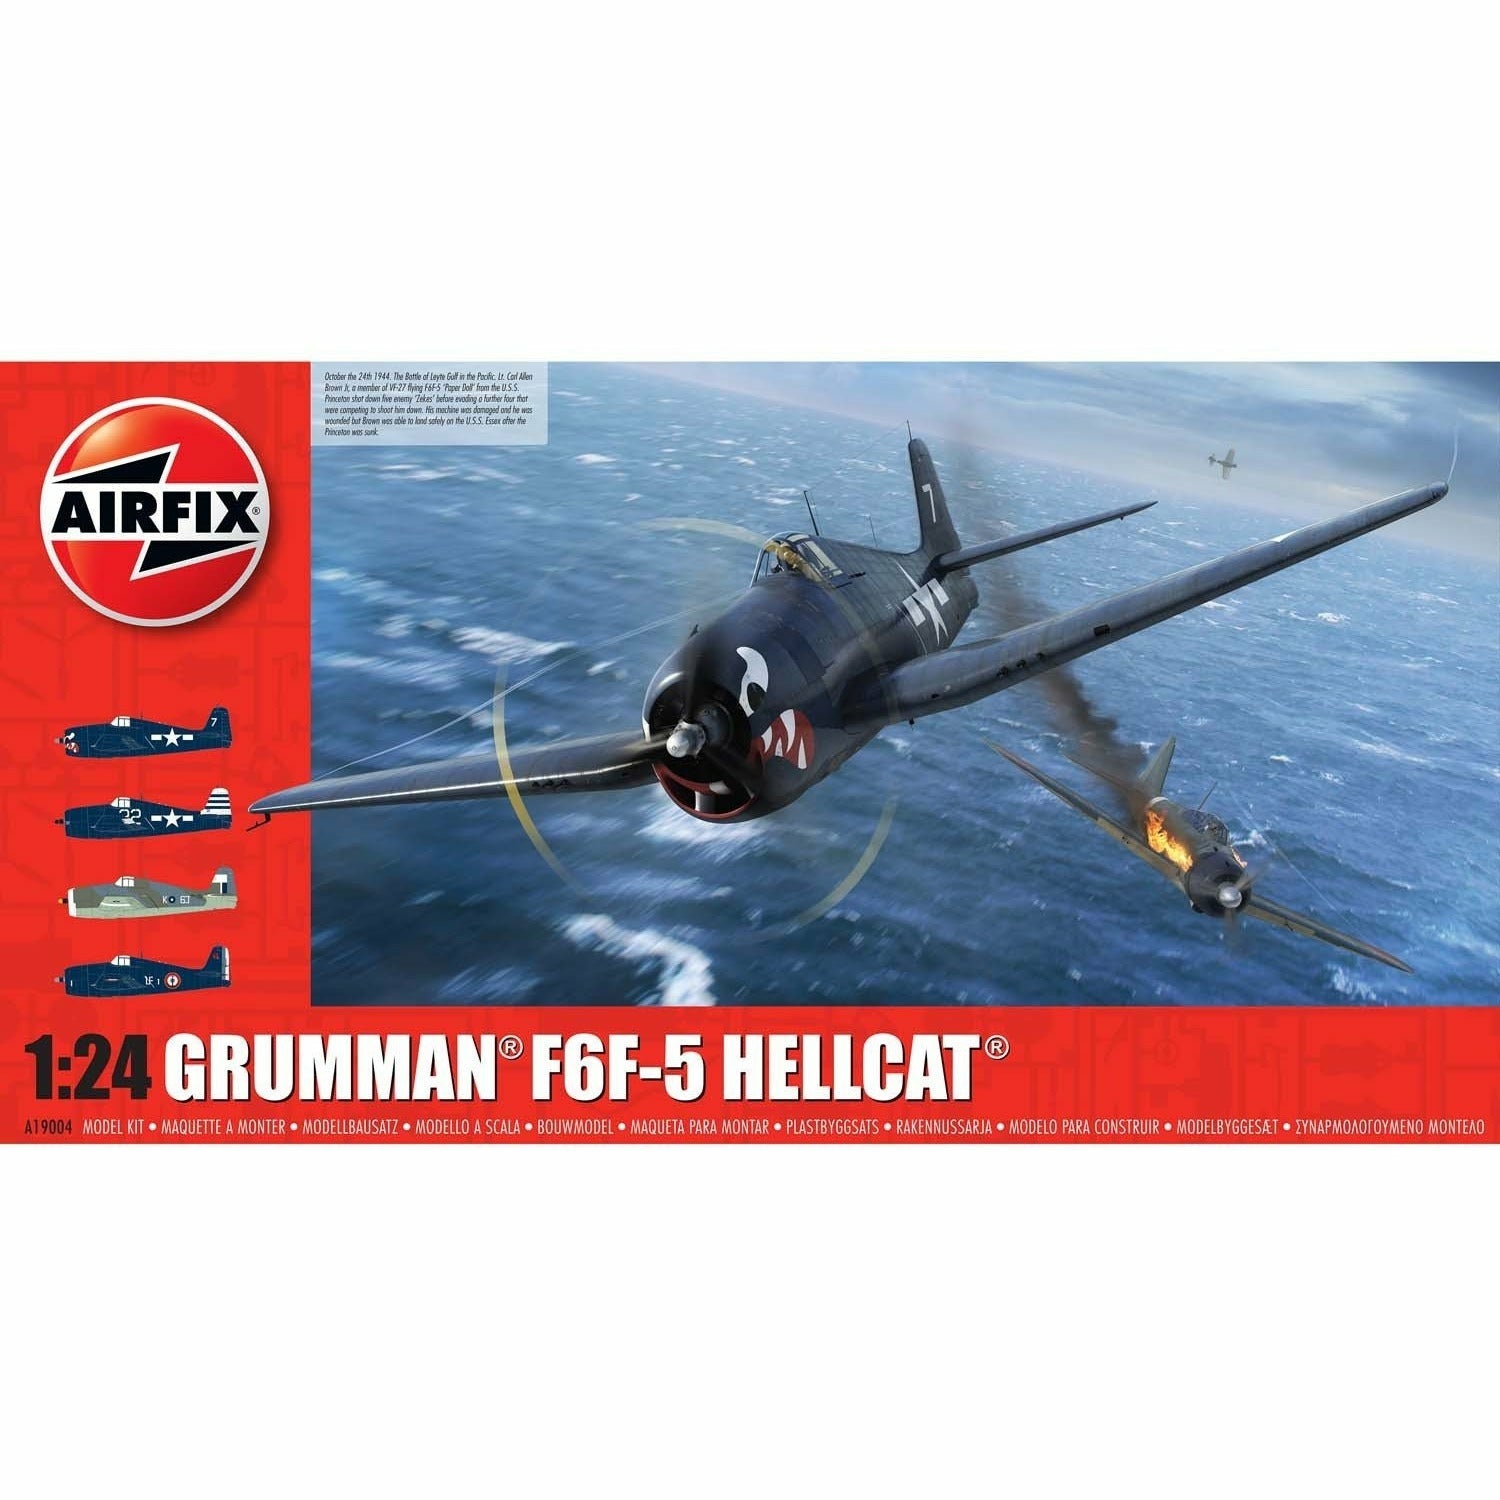 Grumman f6f-5 Hellcat 1/24 by Airfix